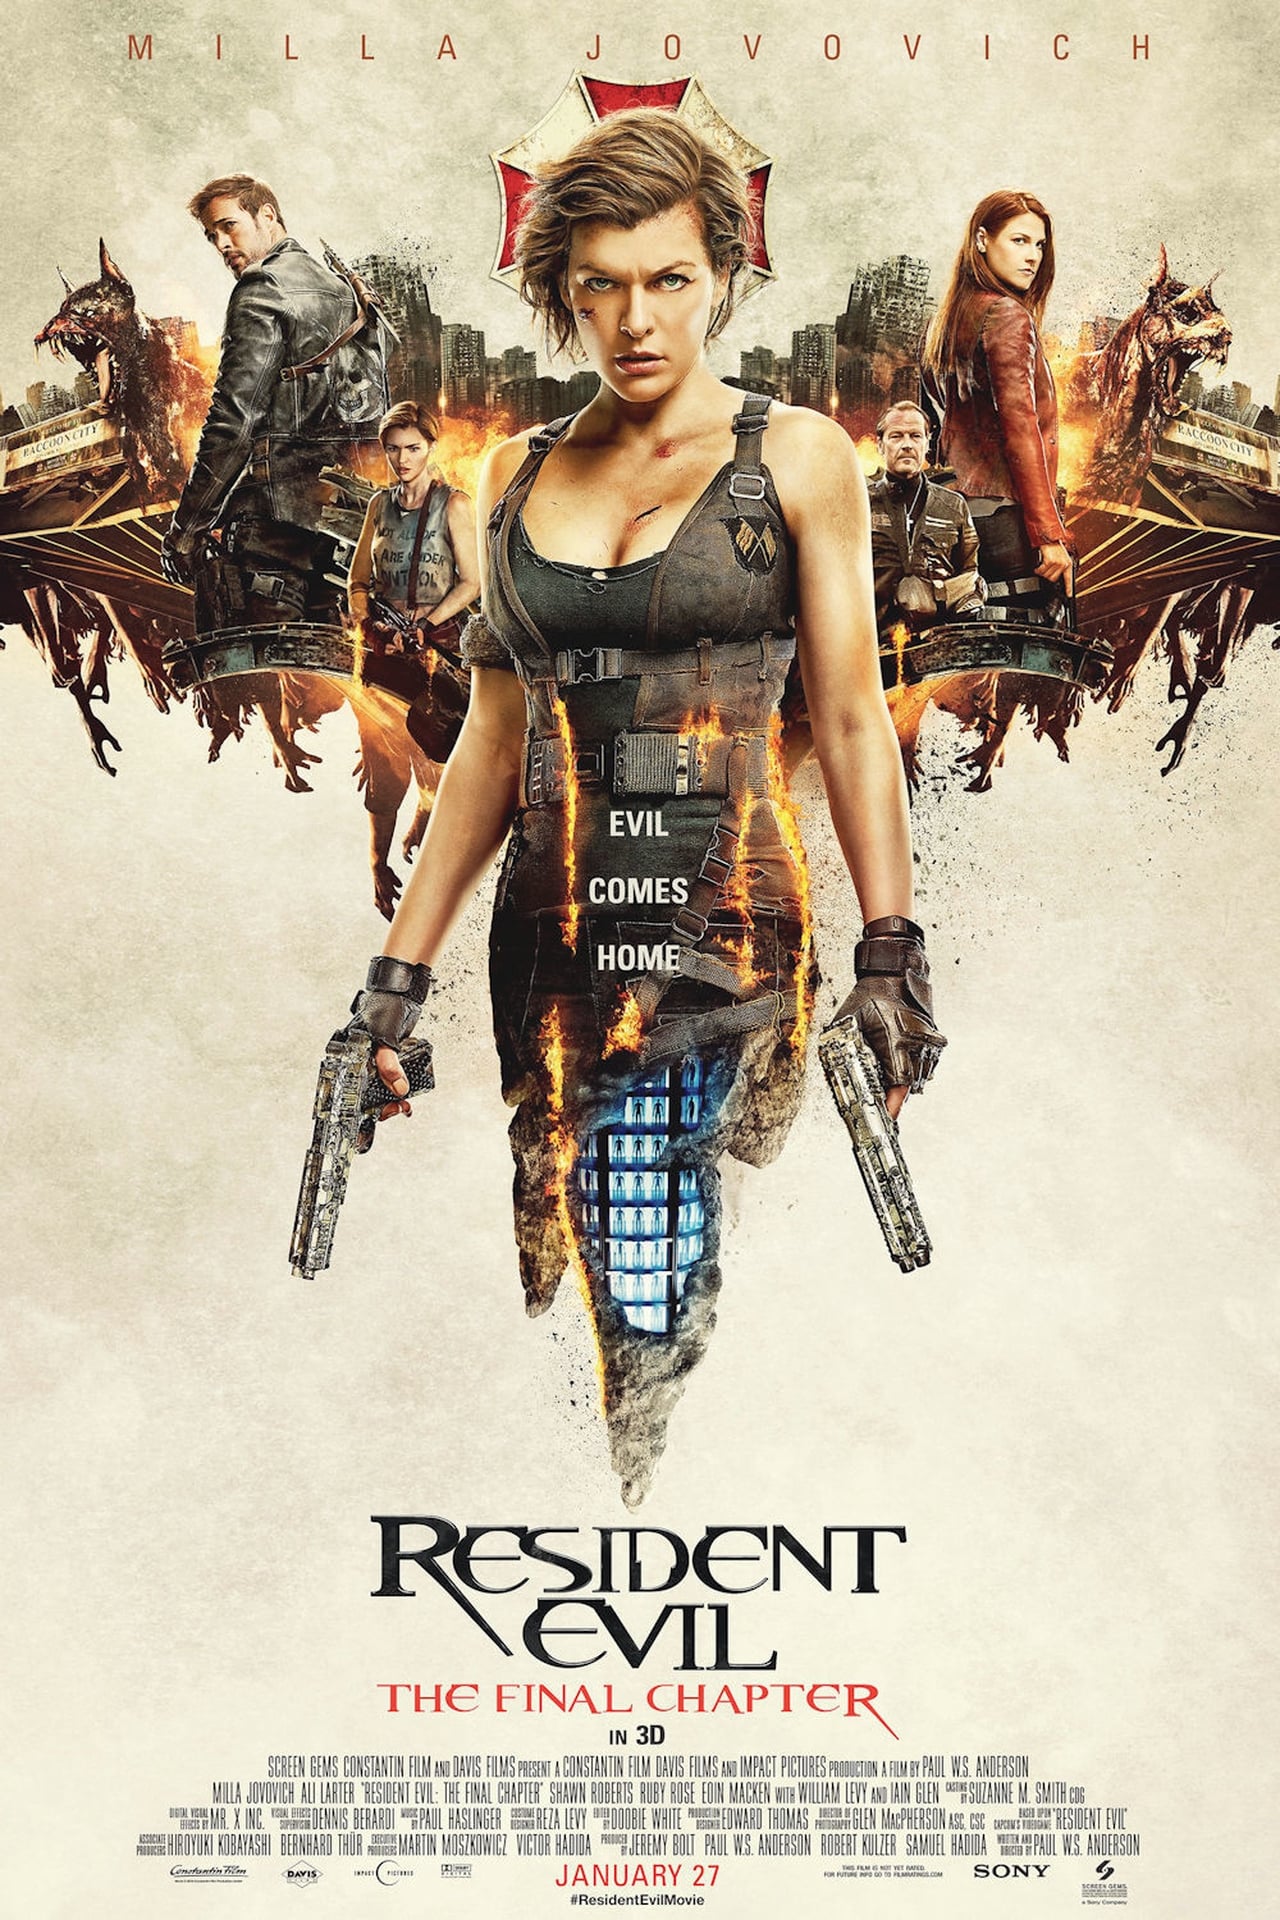 Resident Evil: The Final Chapter (2016) Retaliation Mode Extended Cut 640Kbps 23.976Fps 48Khz 5.1Ch BluRay Turkish Audio TAC